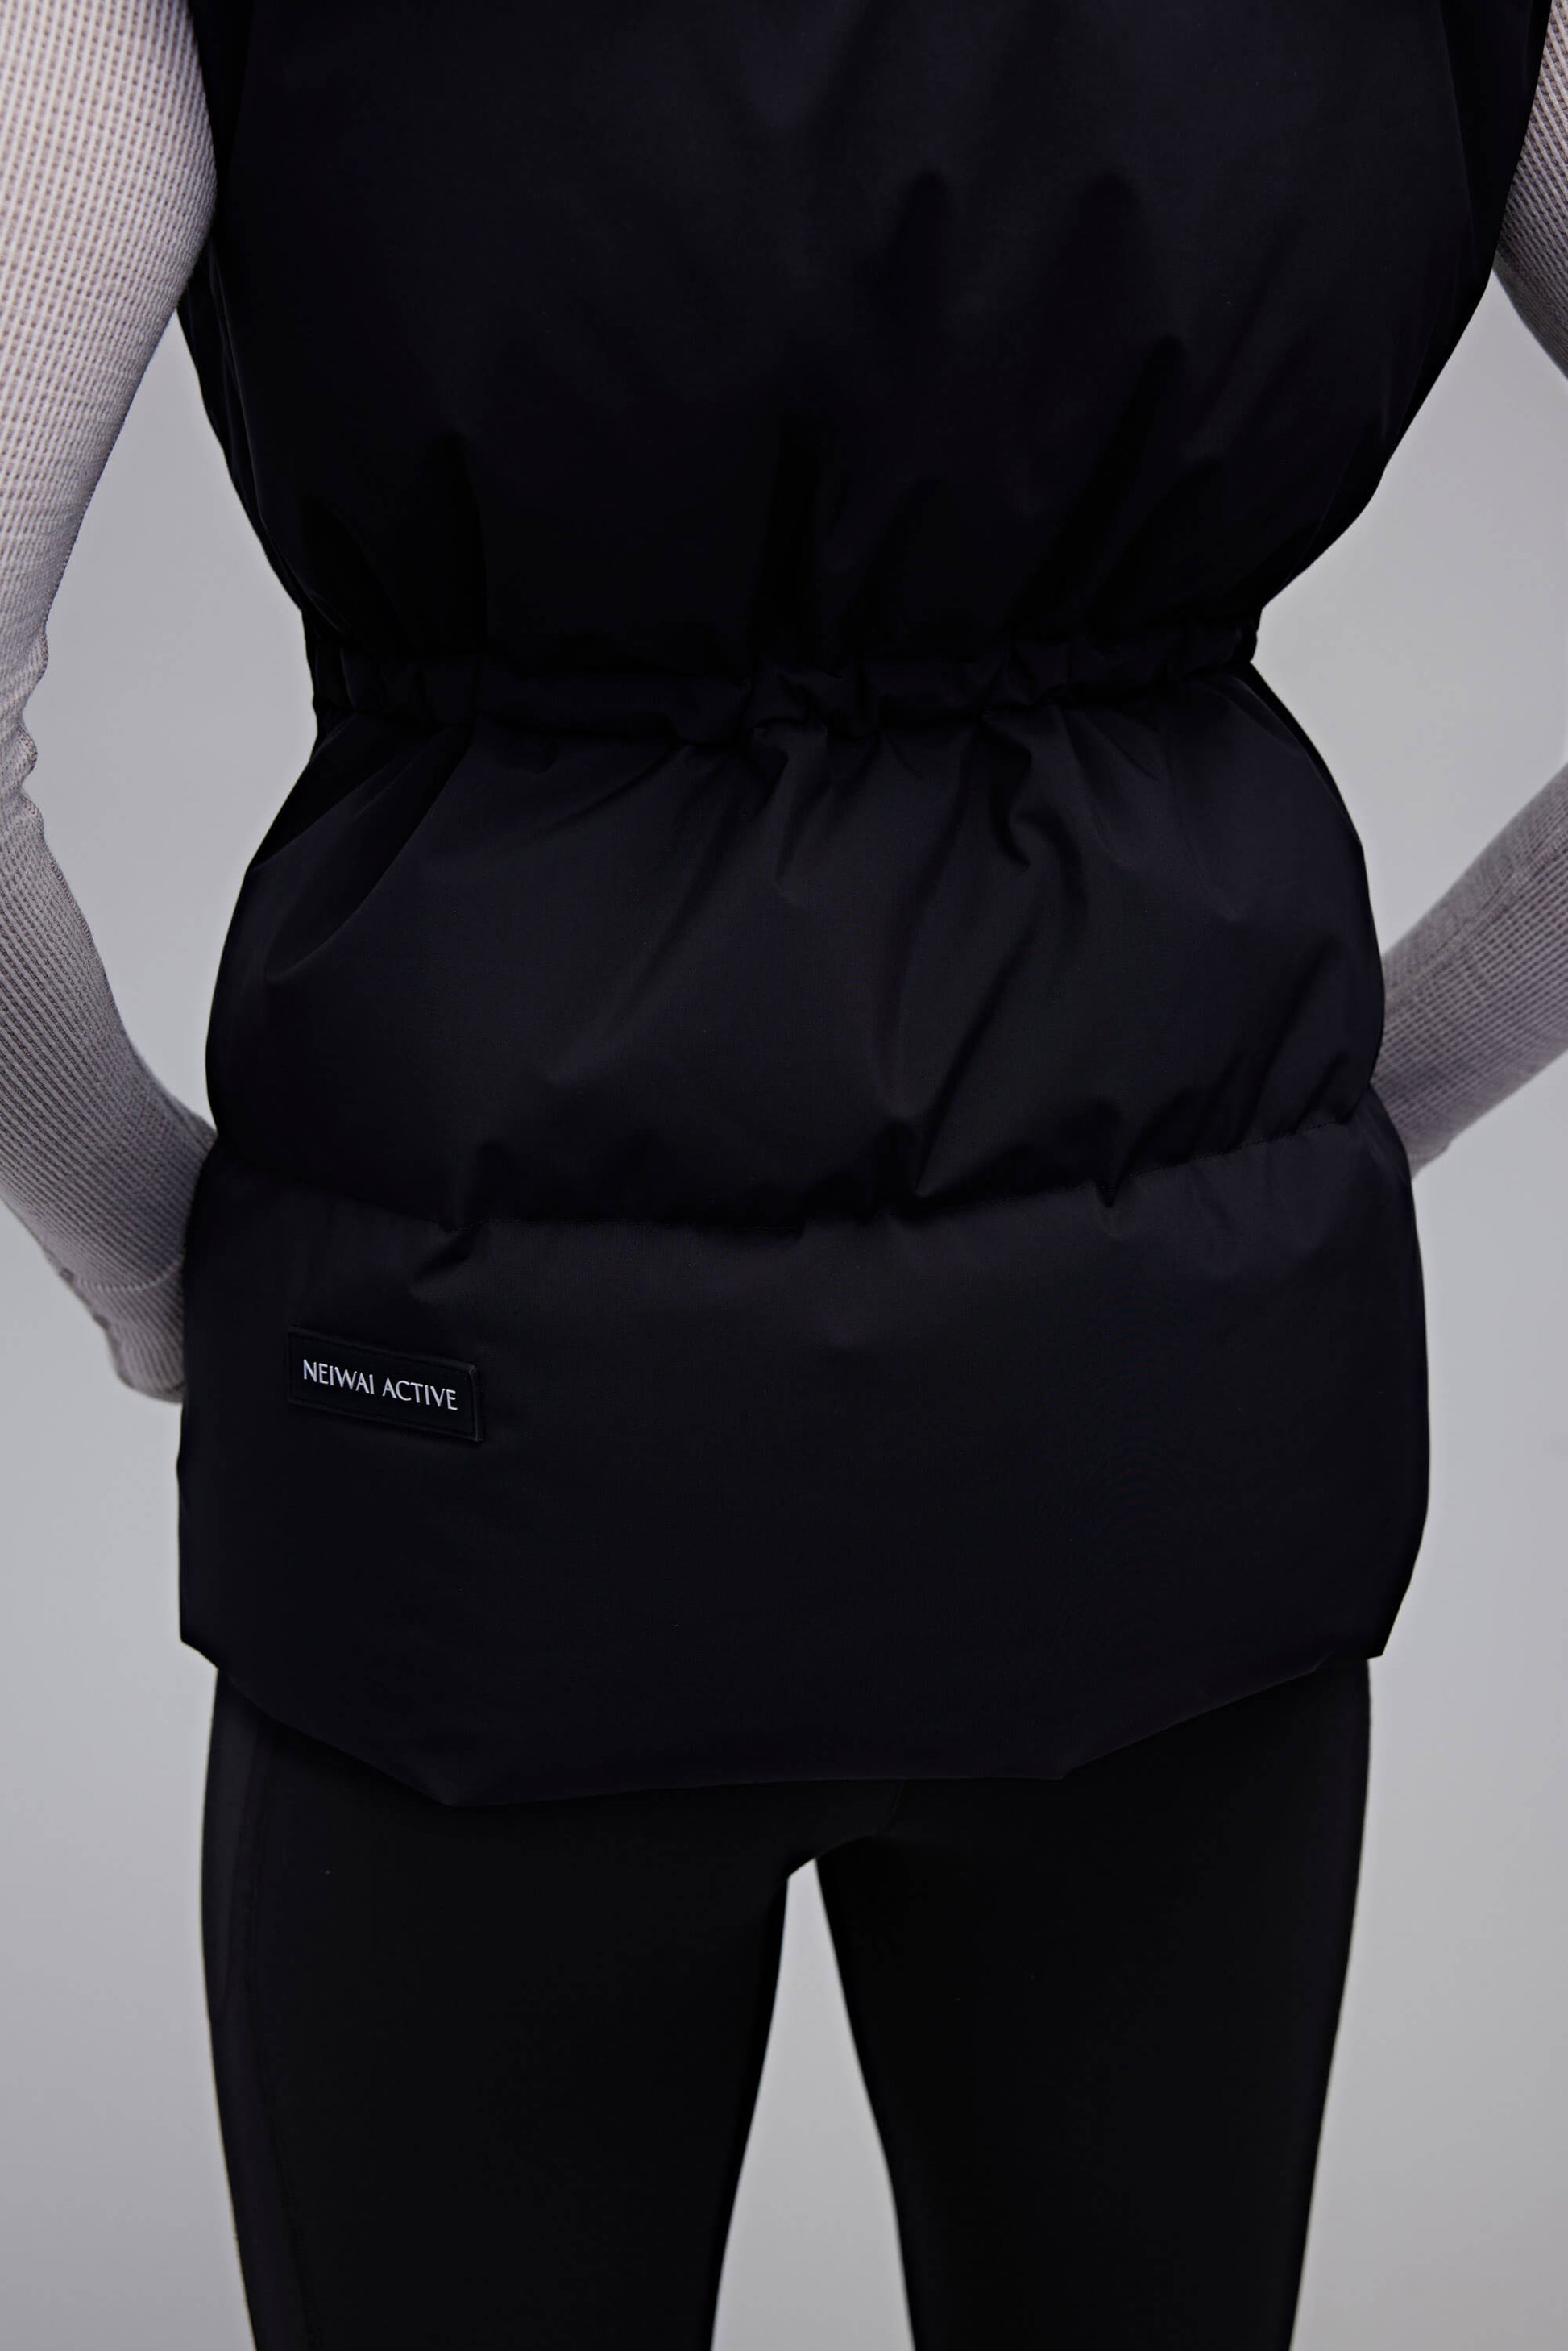 back of woman in black down vest